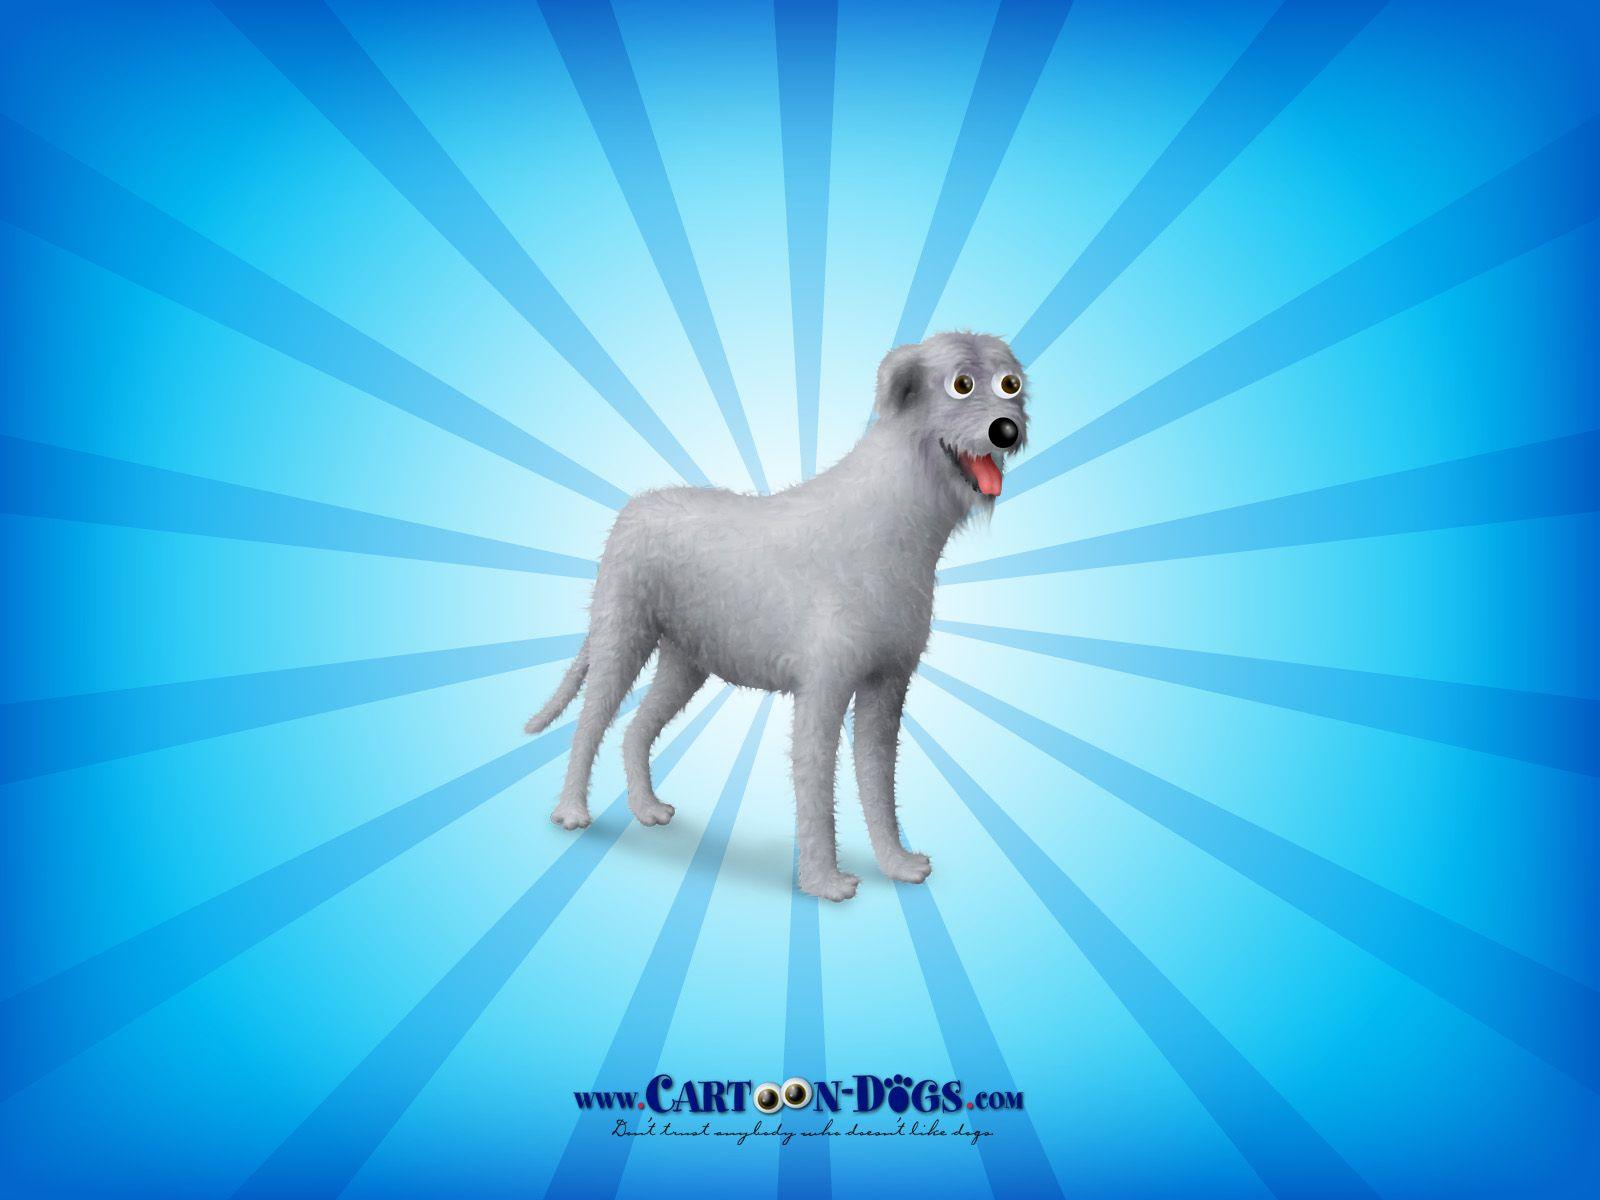 Irish Wolfhound by Cartoon Dogs: Free downloads avatars, icons